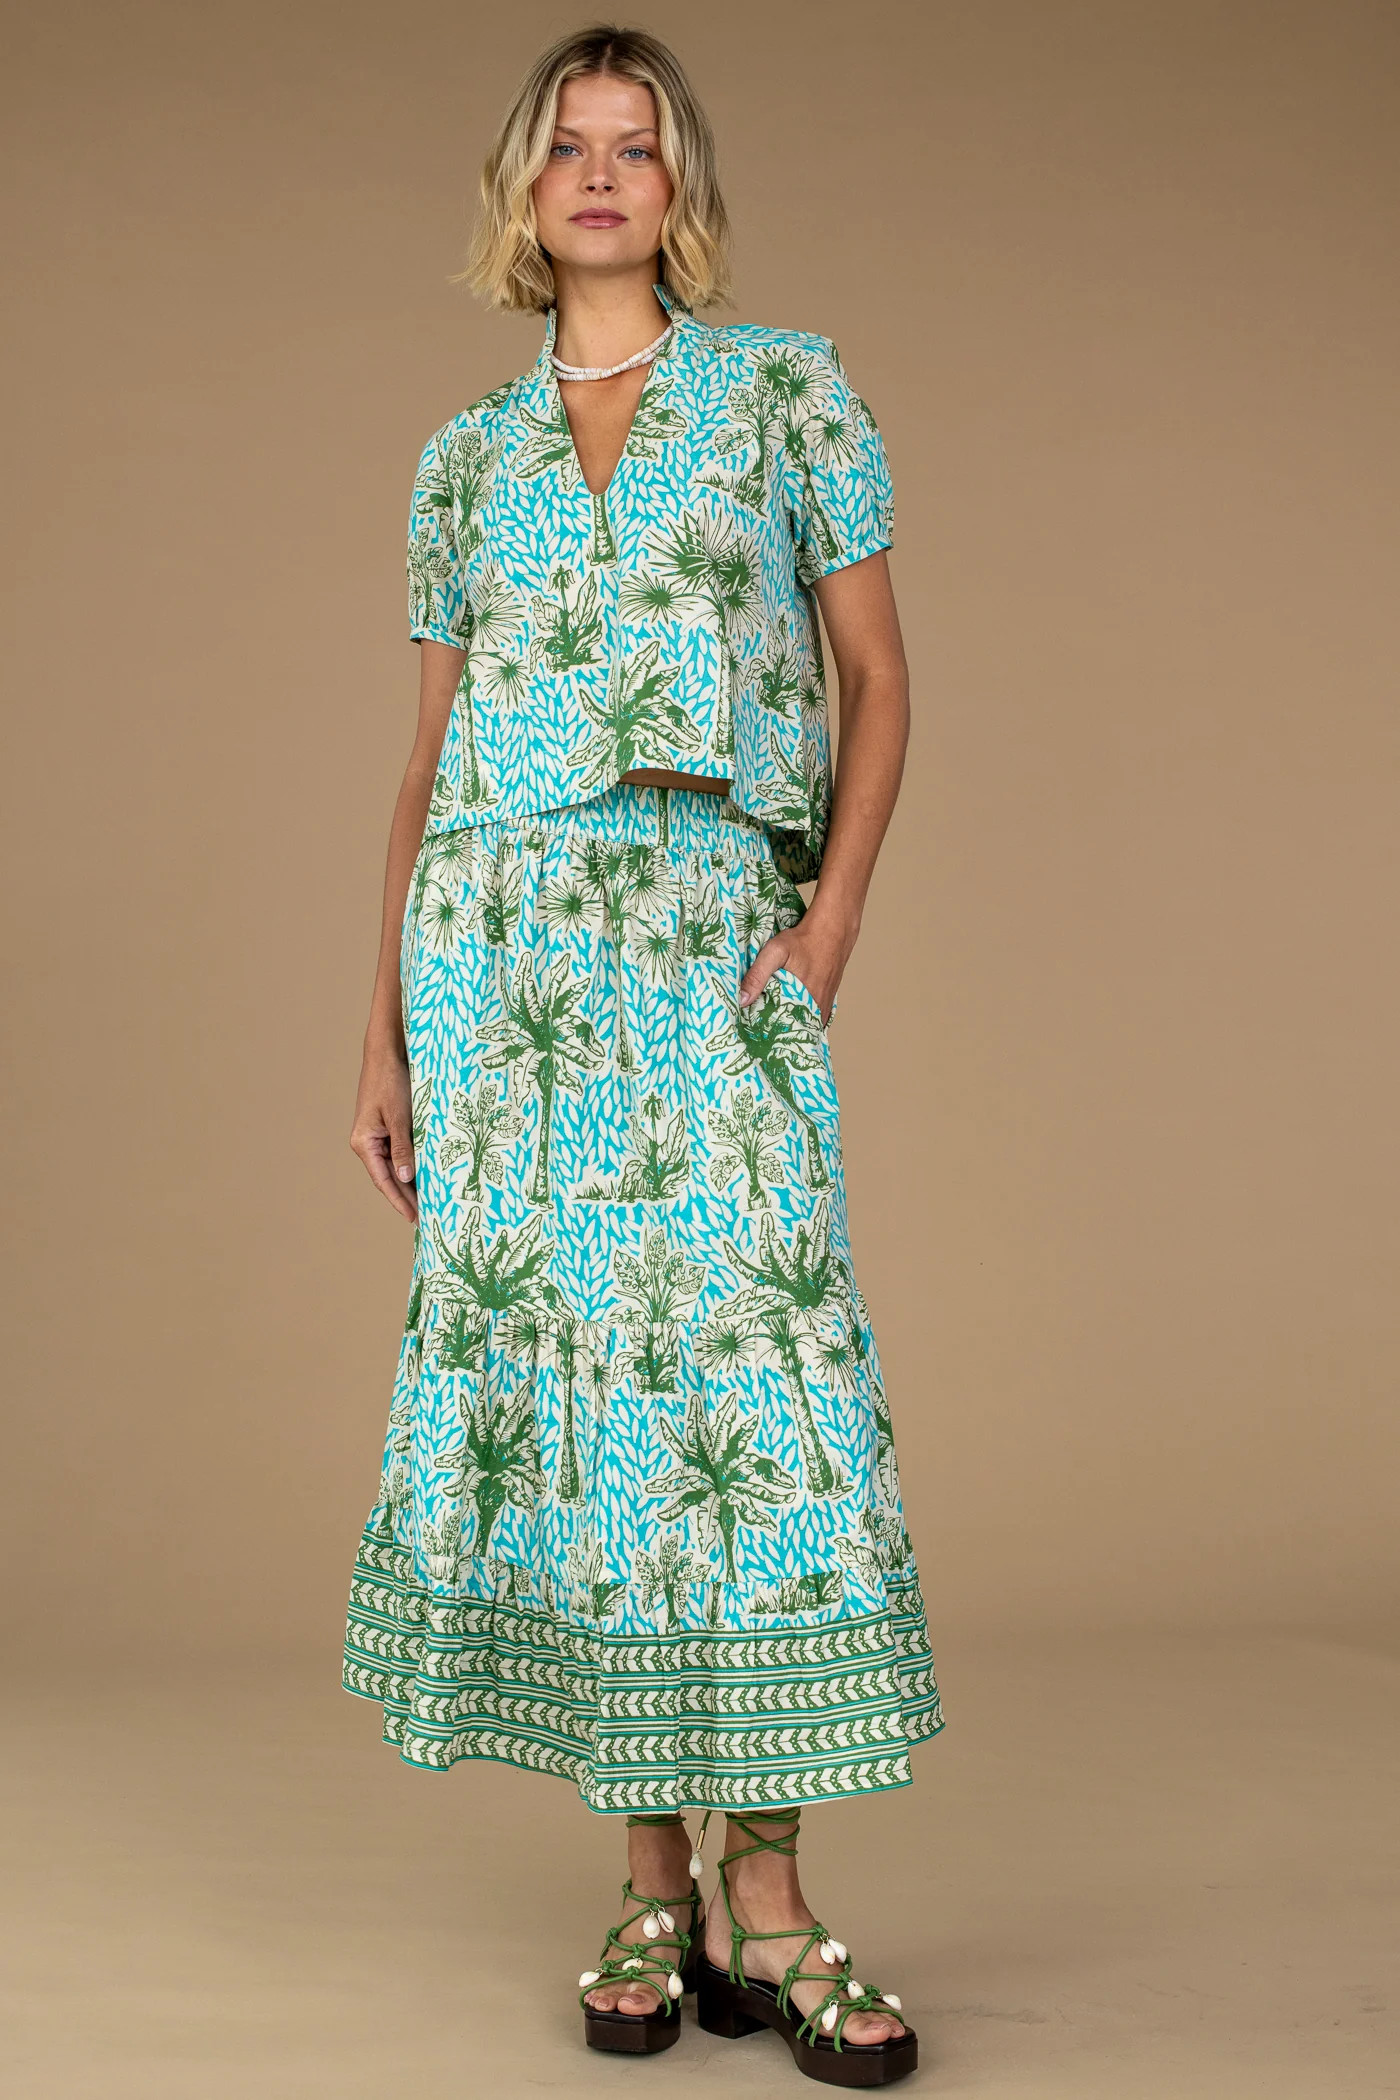 Surrey Skirt in Island Palm | Elizabeth James The Label